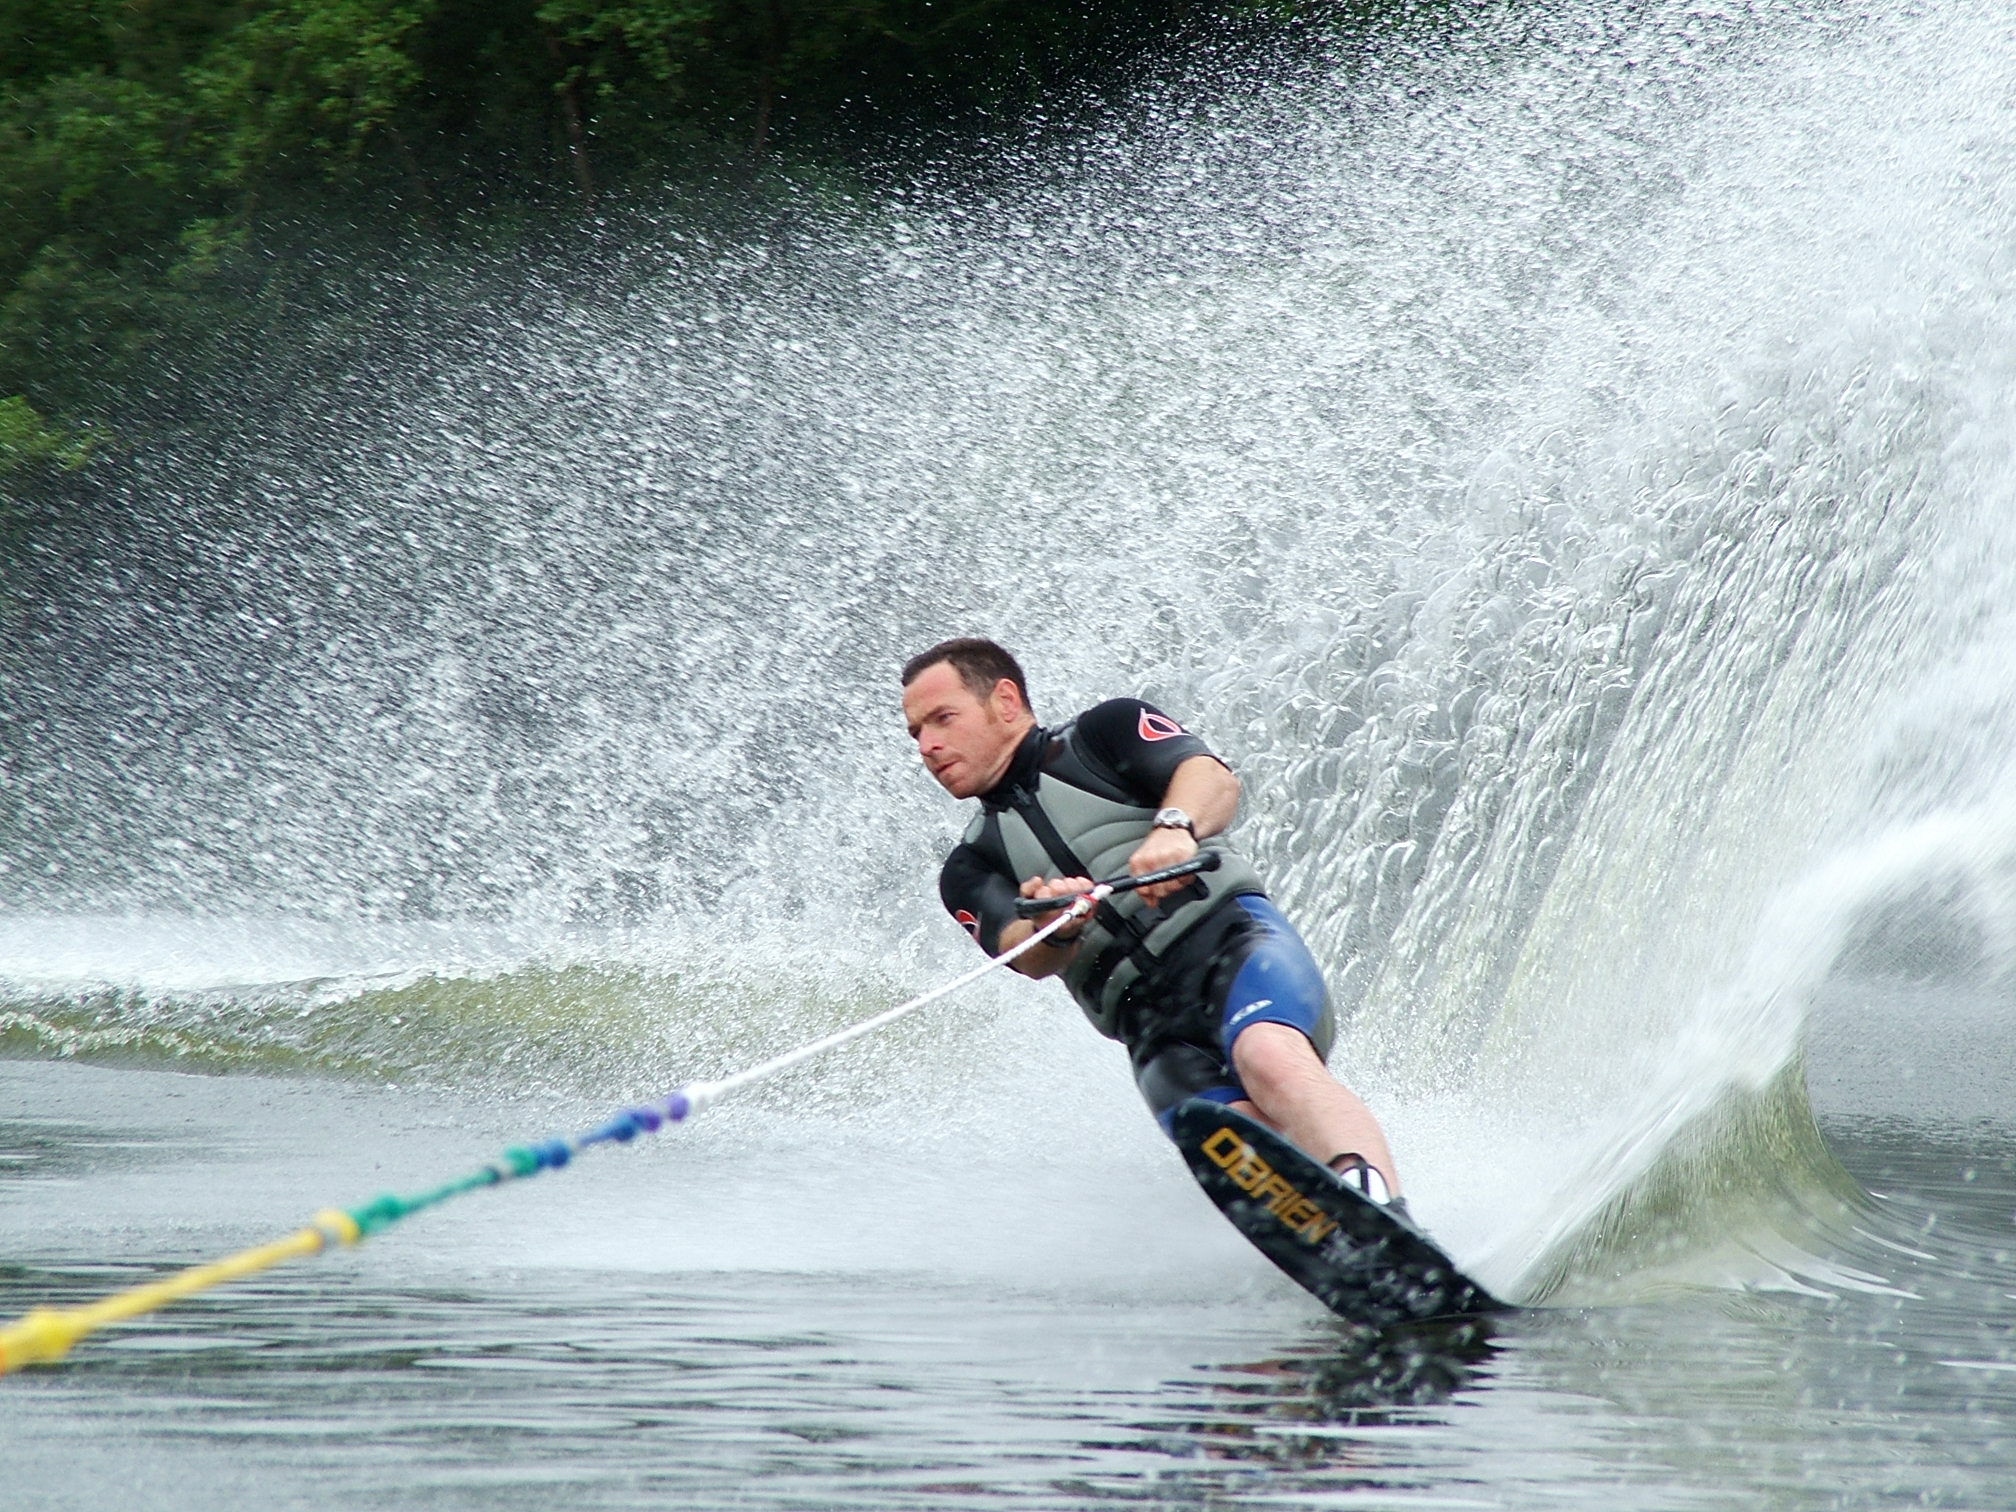 Water Skis